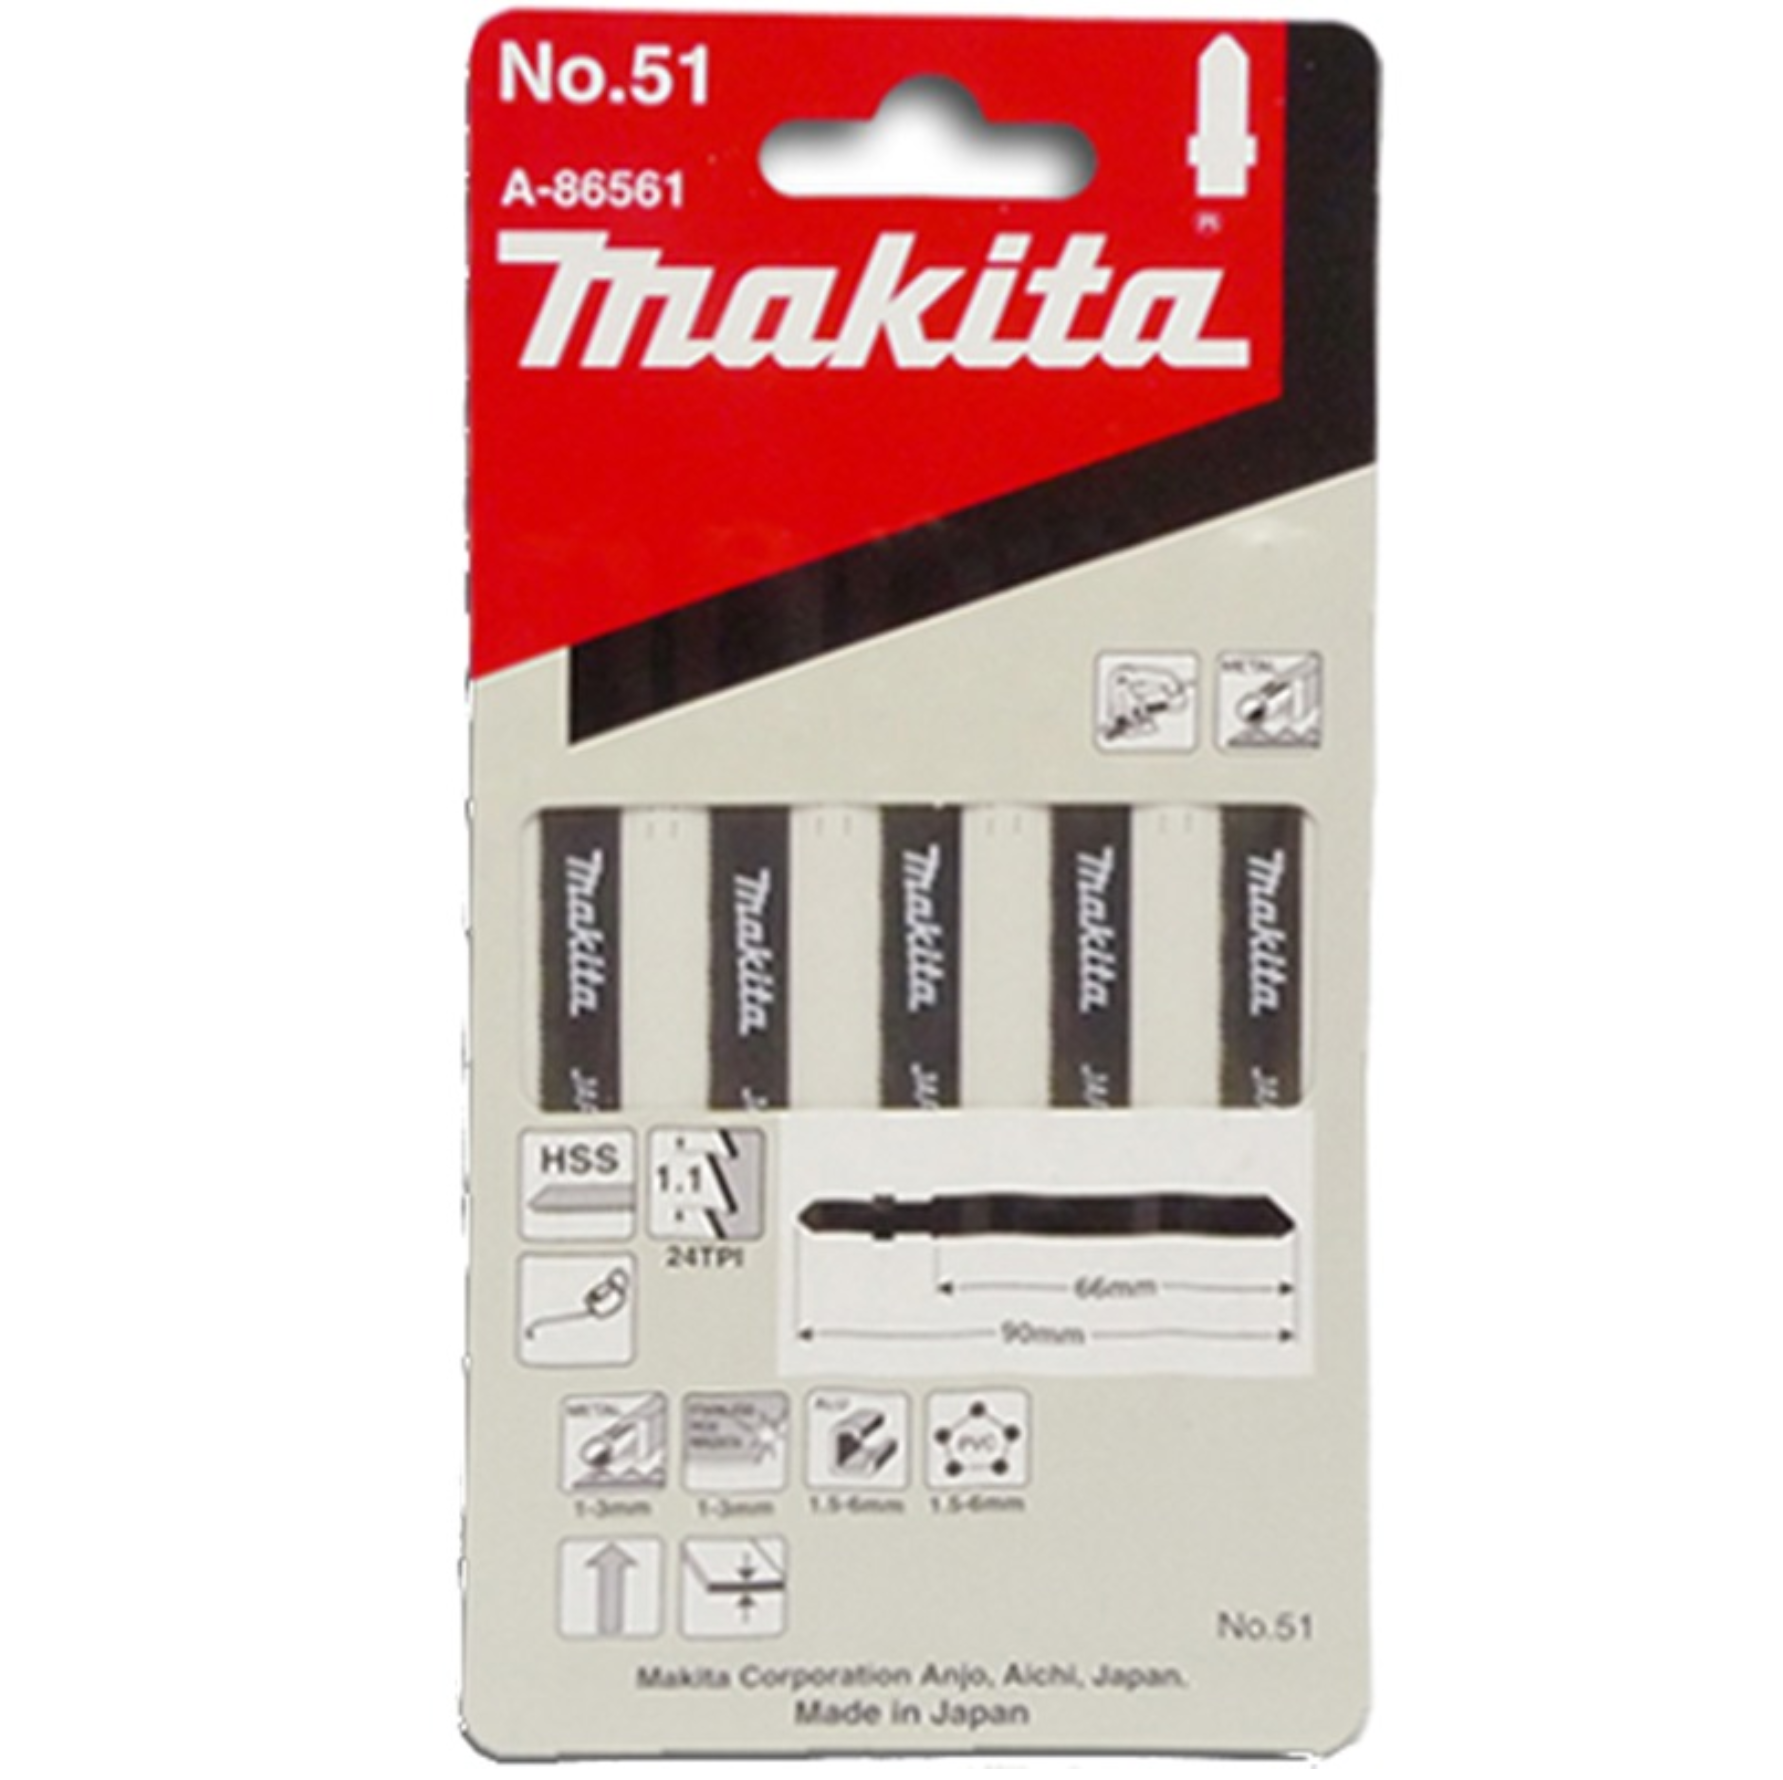 Makita A86561 Jigsaw Blade (B Type) No.51, 5PC/PACK